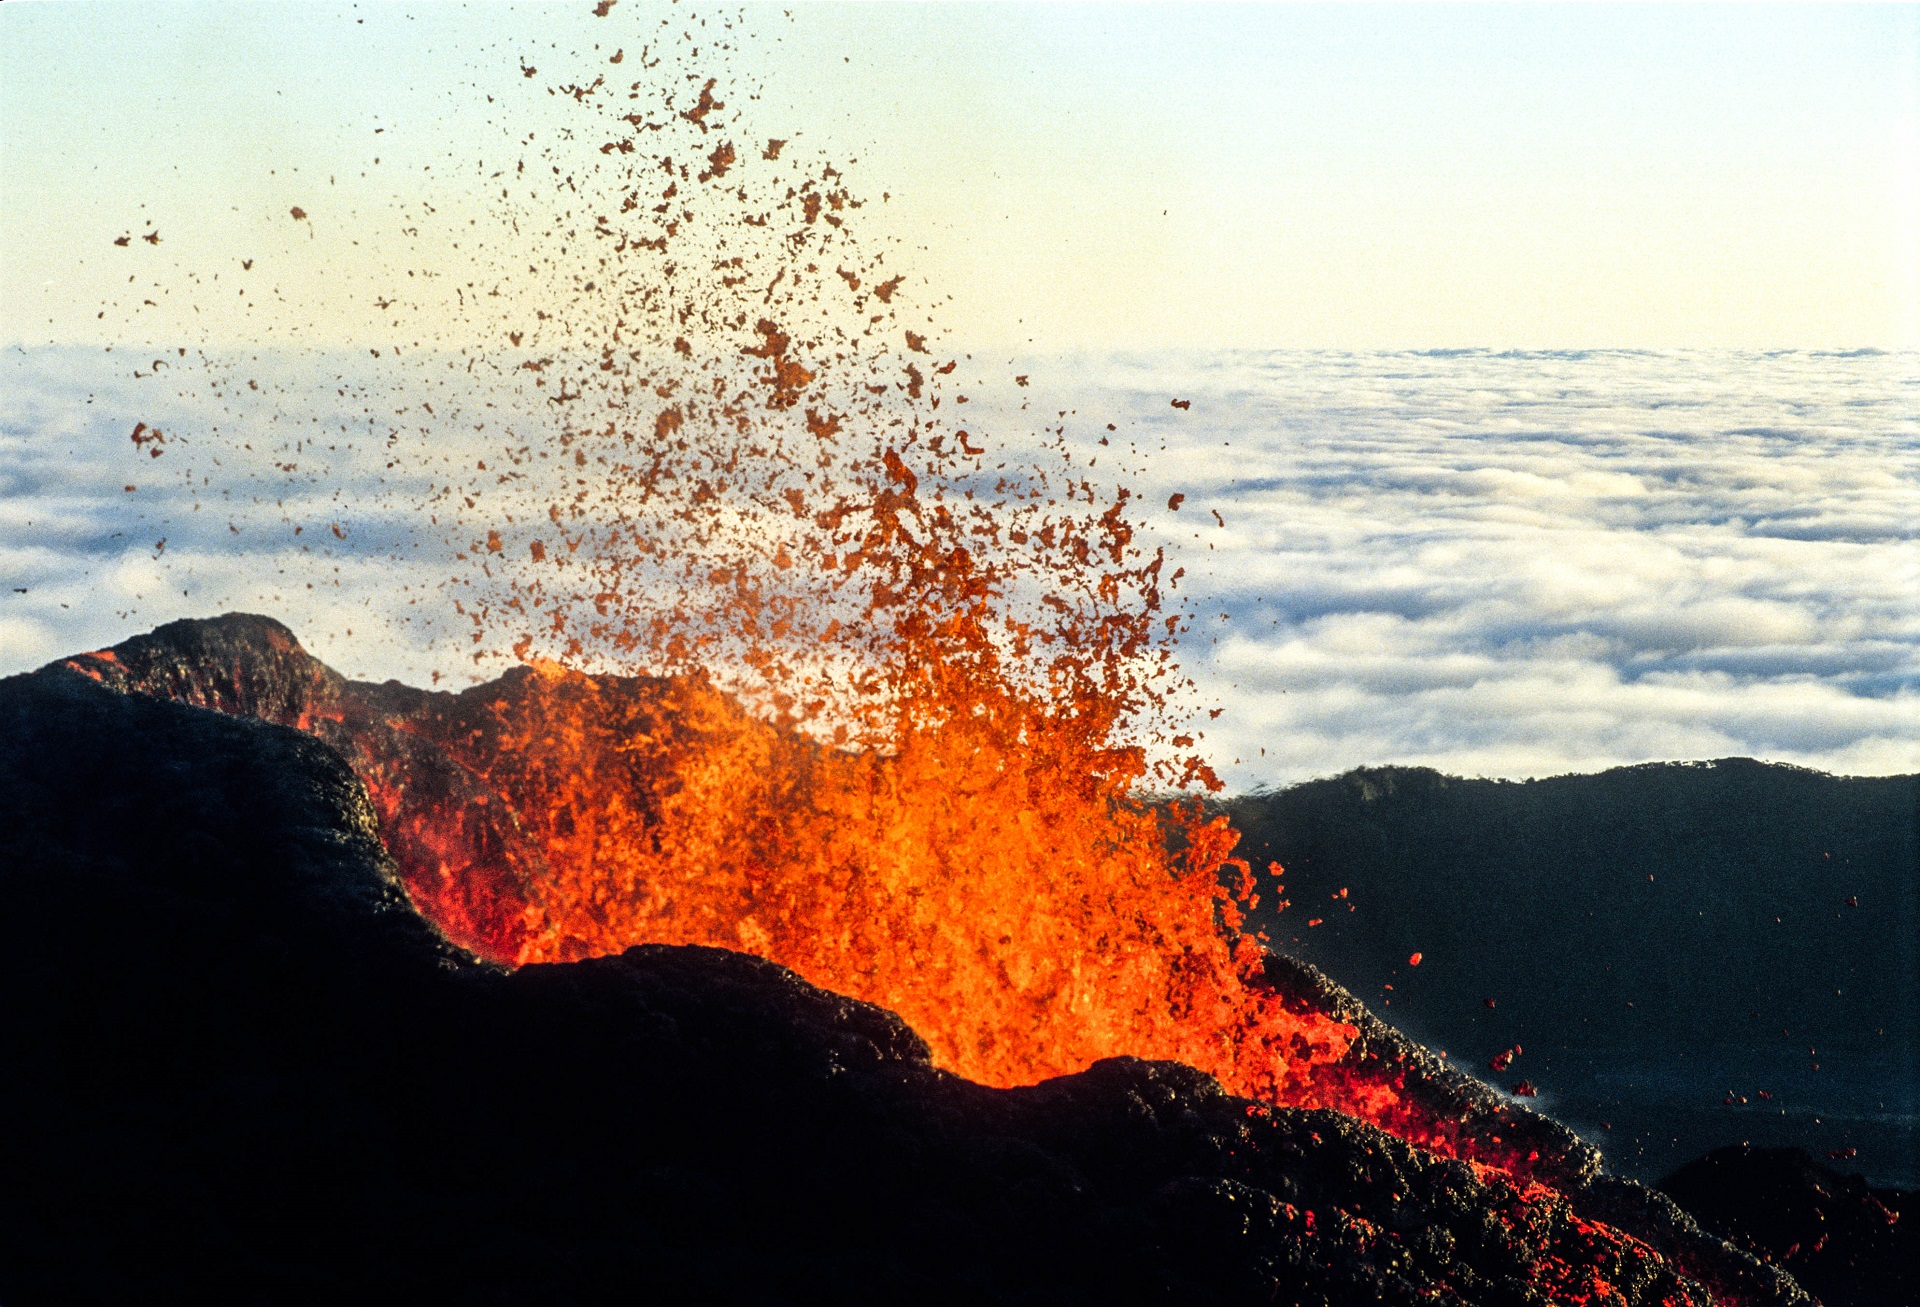 vulkan eruption lava insel reunion istock_000002159753_large 21